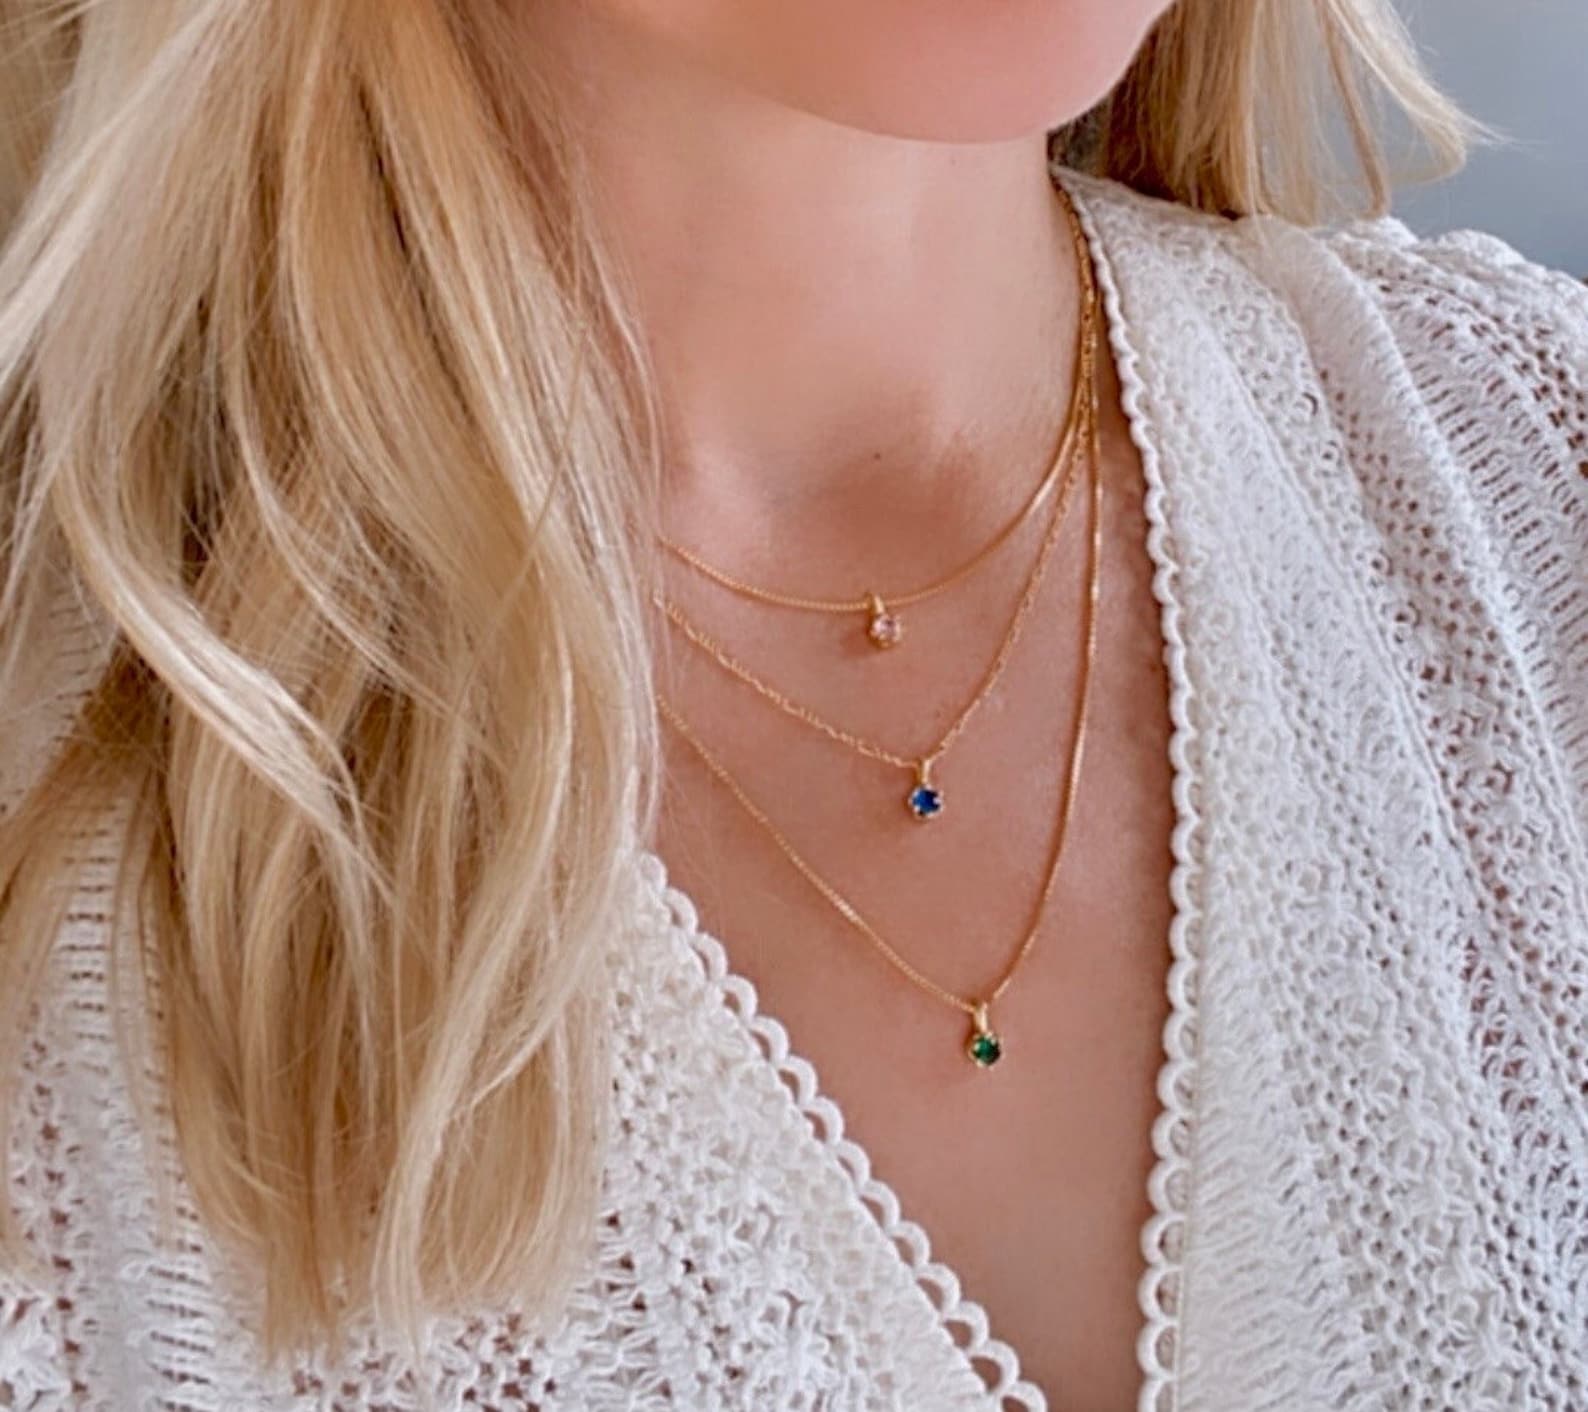 Ultra Dainty Rose Quartz Pendant Necklace - October Birthstone - Gold Filled